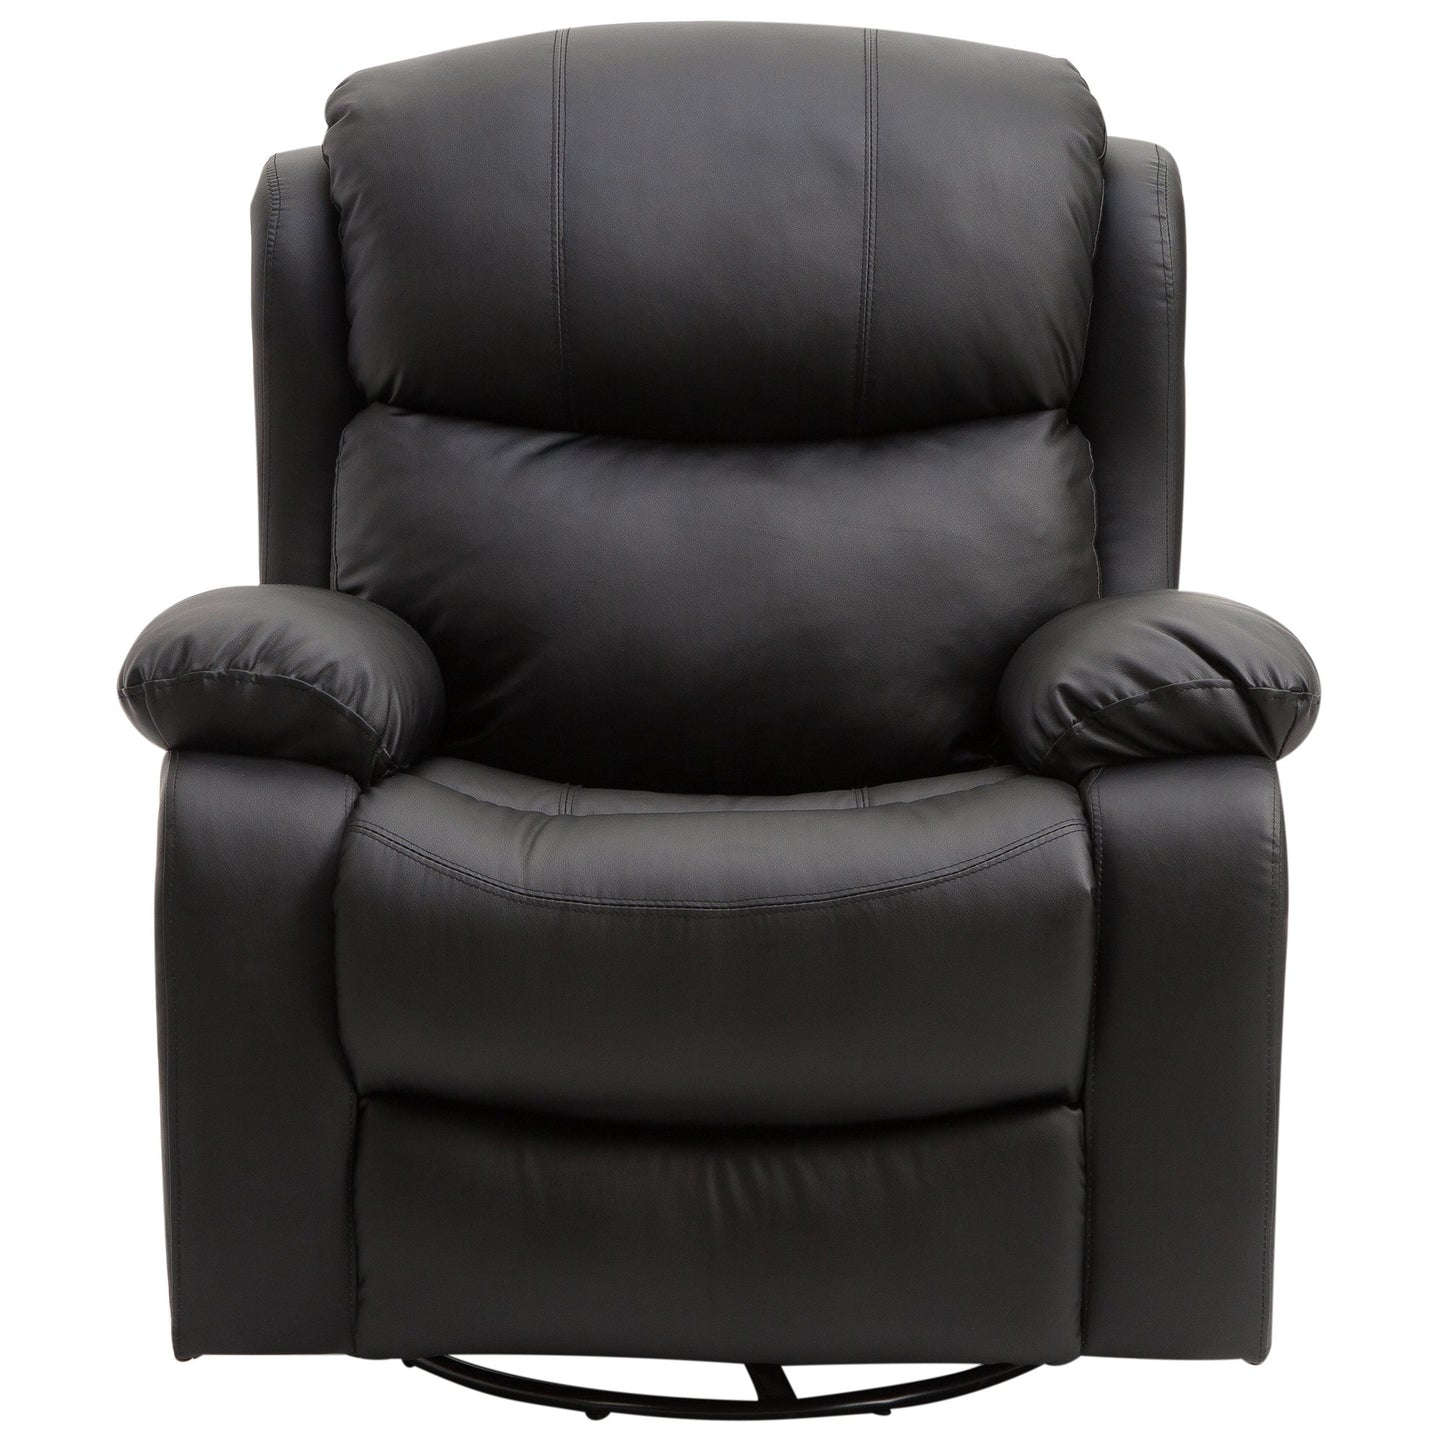 HOMCOM Recliner Massage Chair, W/ Heating, PU Leather-Black